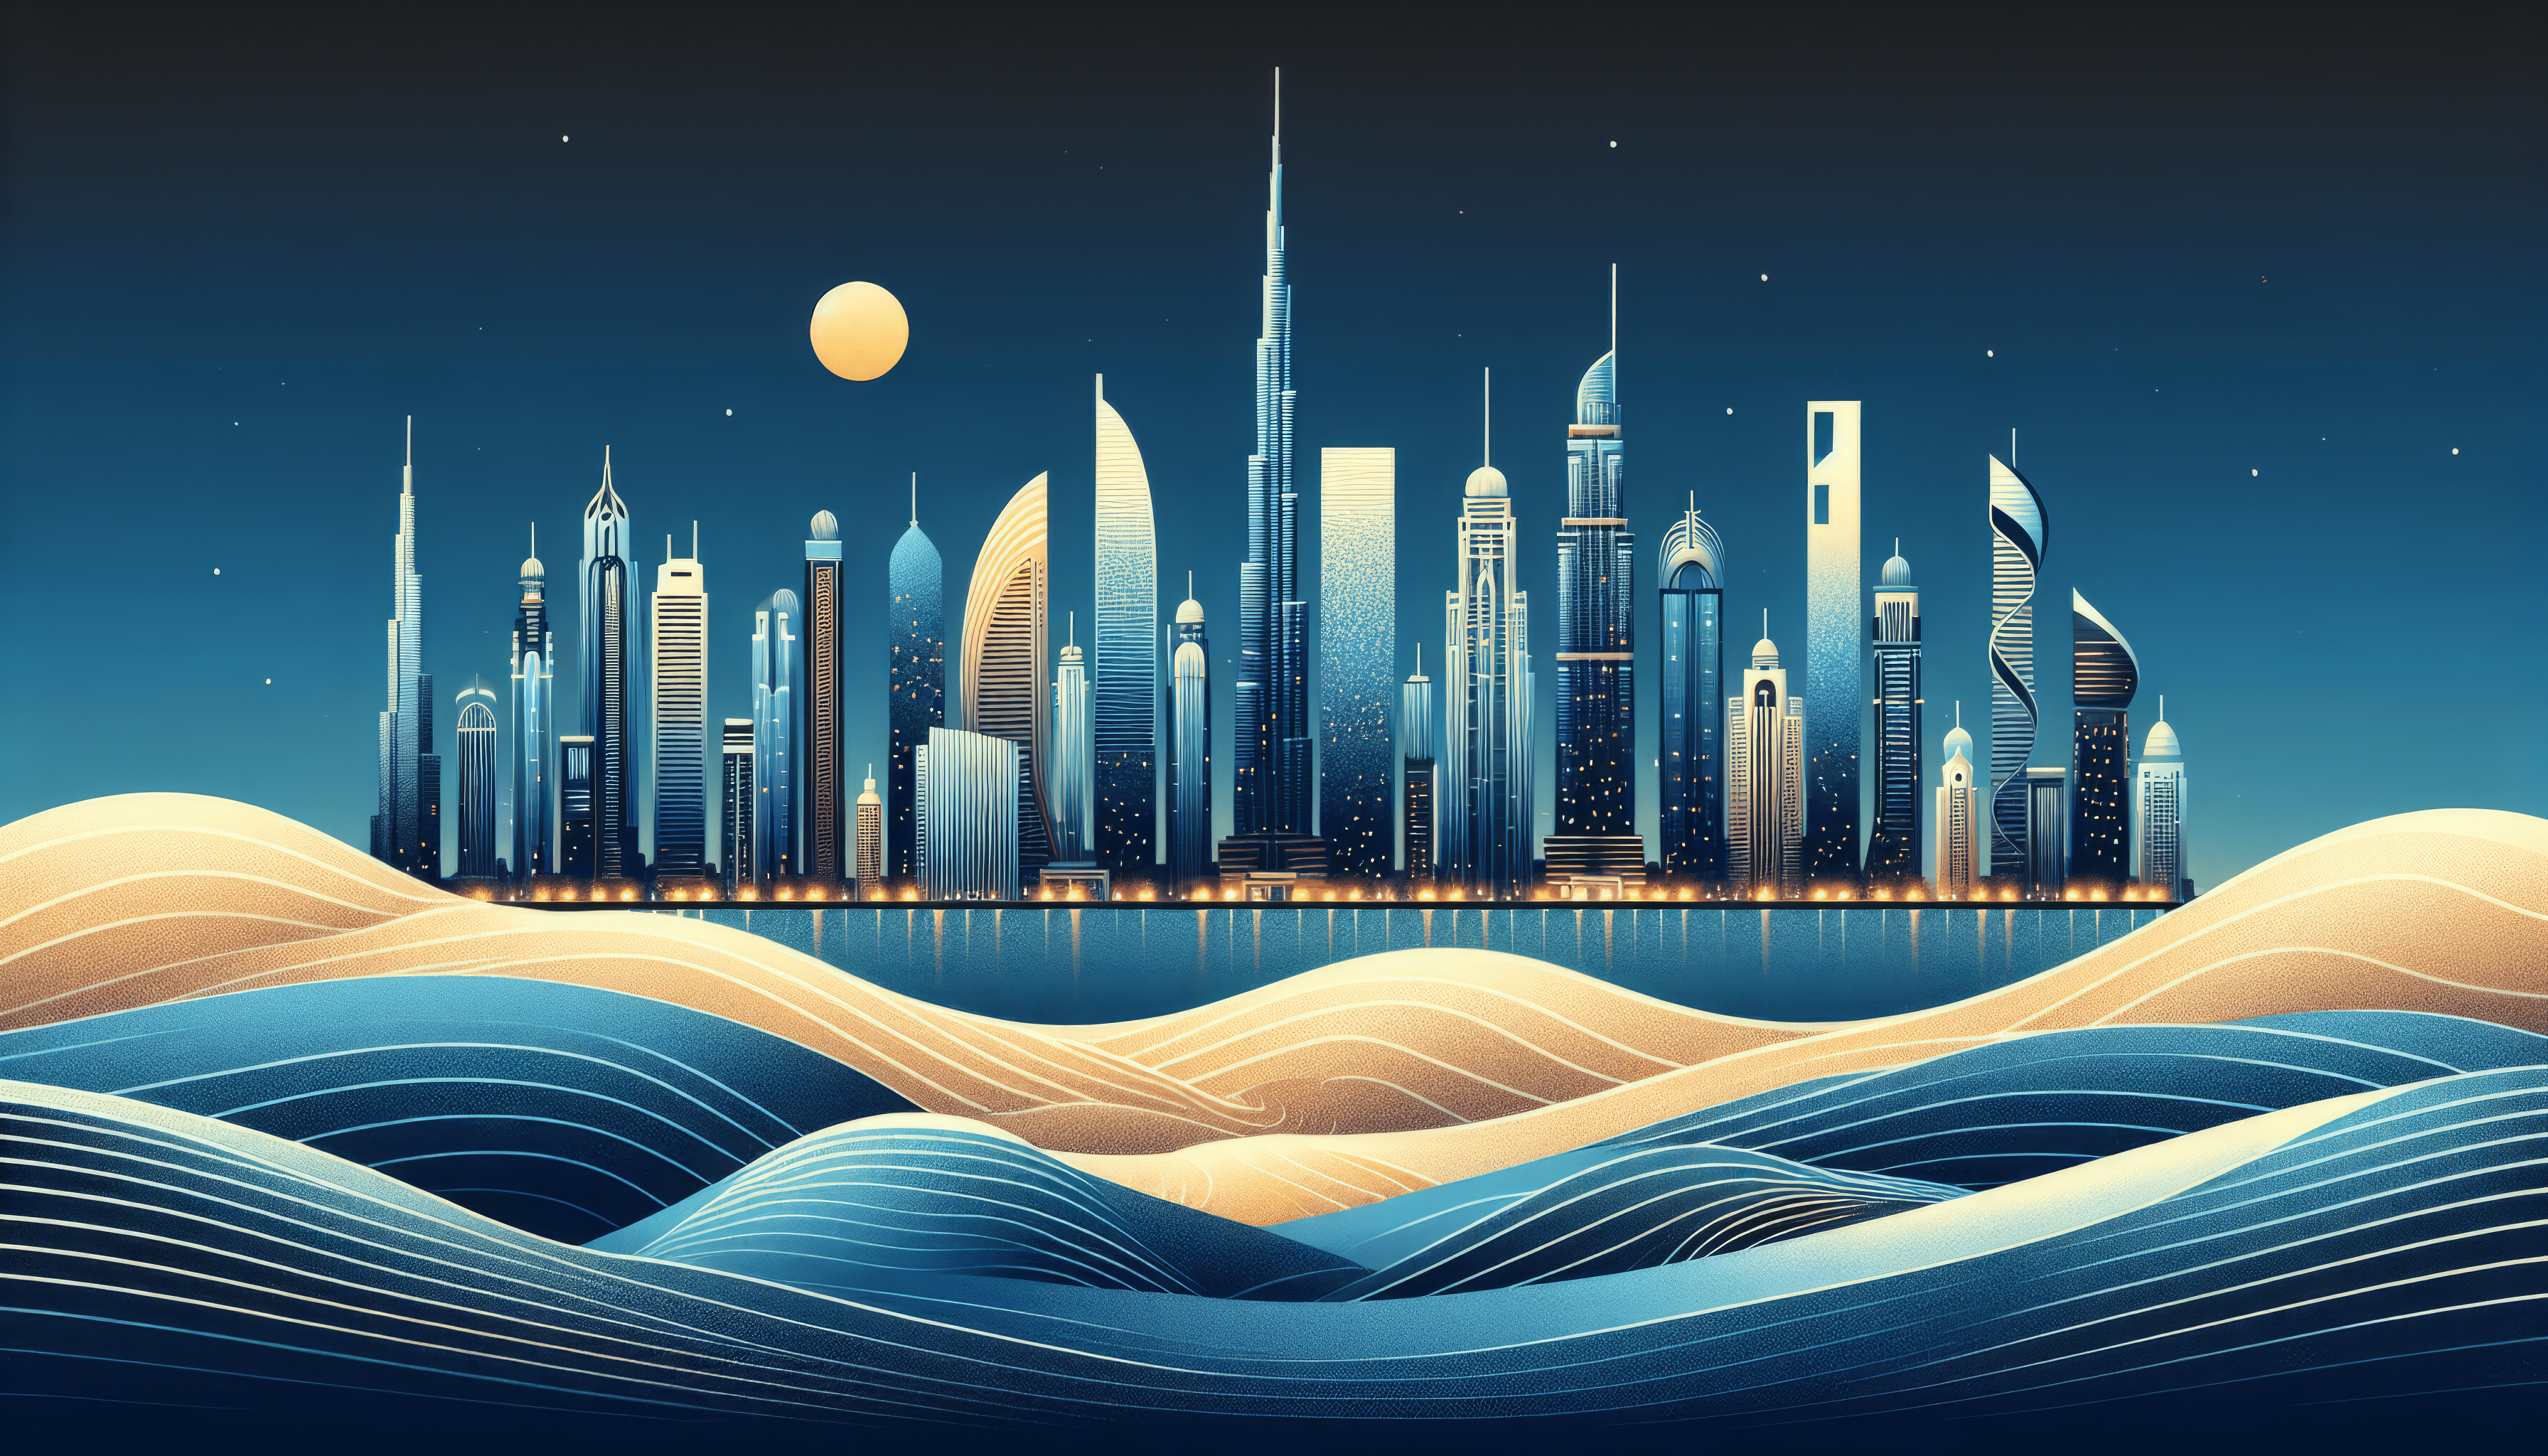 Illustration of a city skyline at night - Dubai